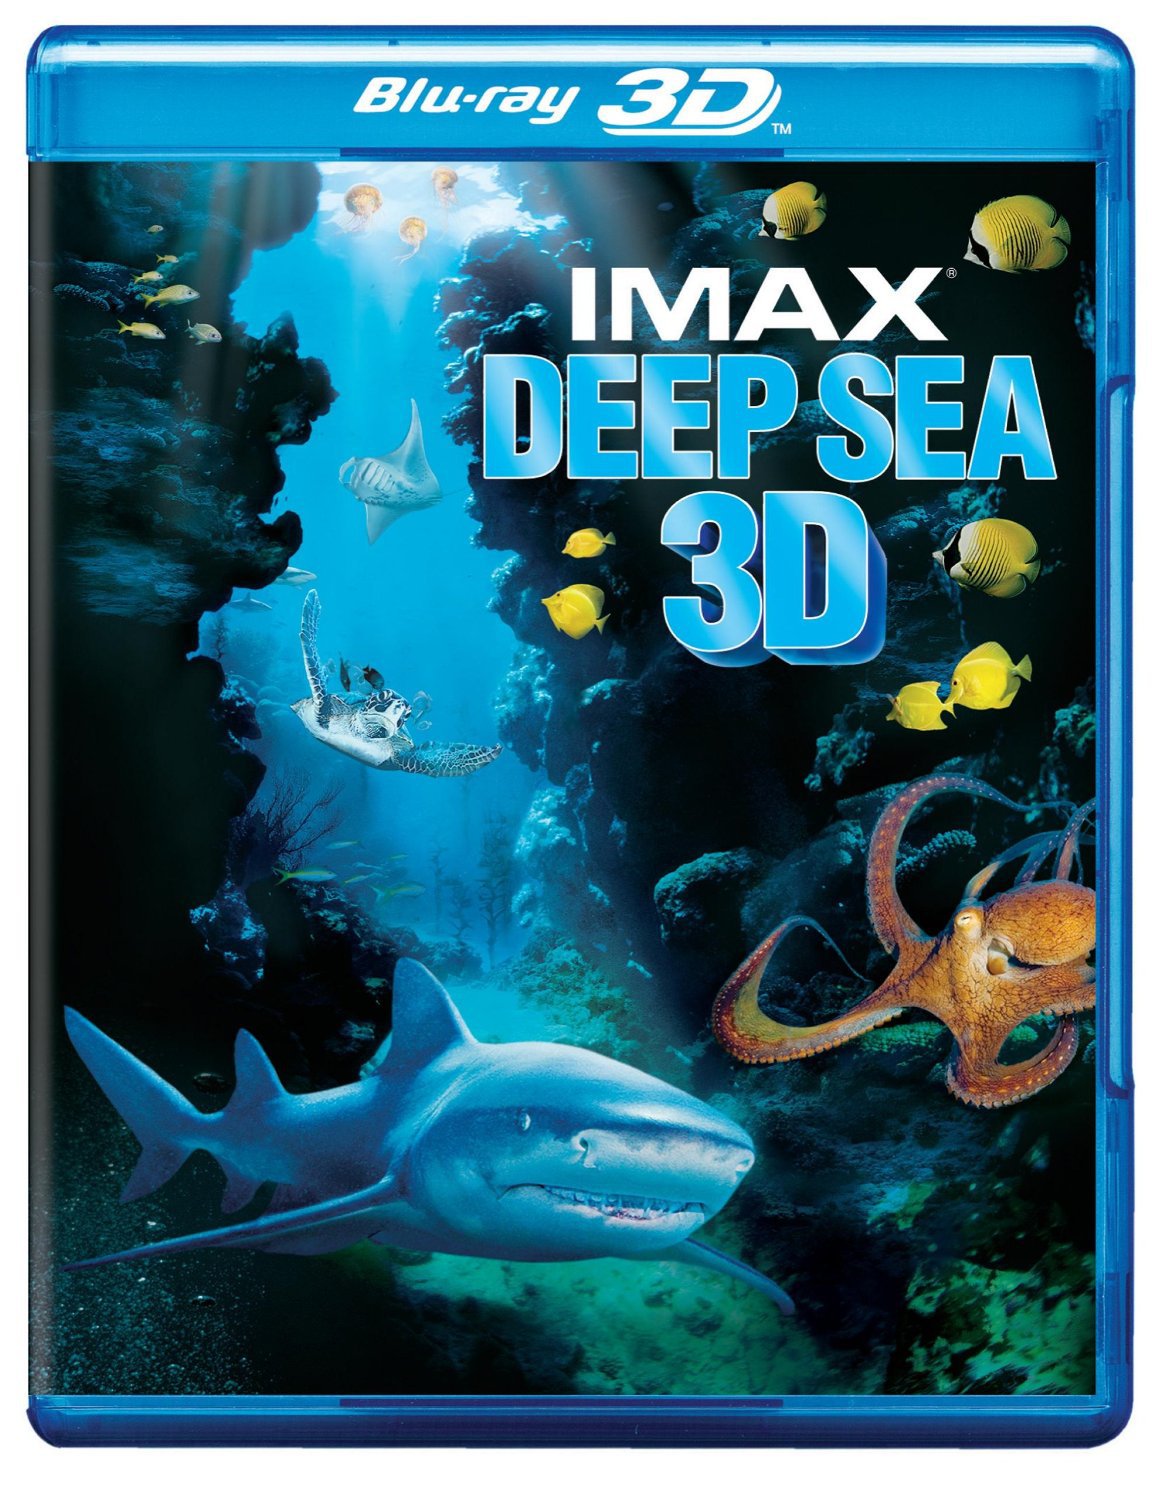 IMAX Deep Sea 3D